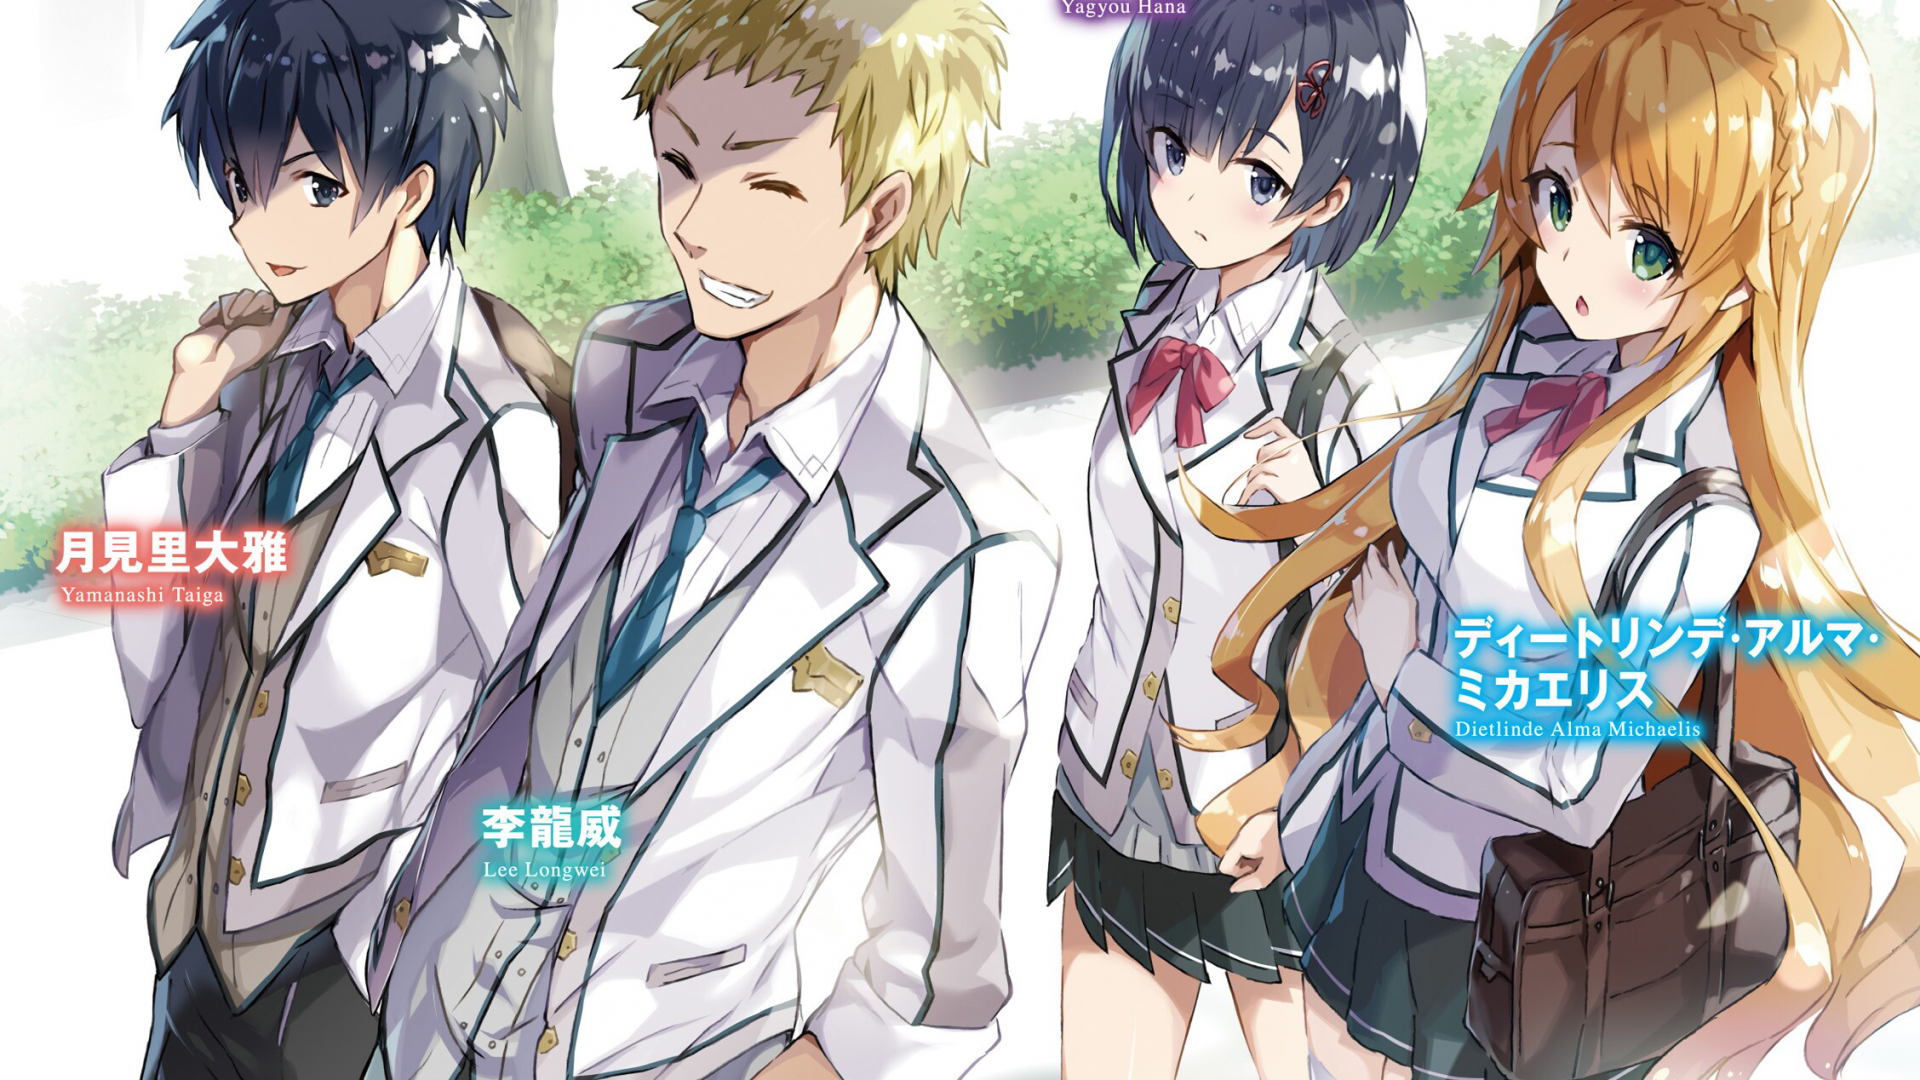 Download 1920x1080 Anime Girls, School Uniform, Smiling, Friends